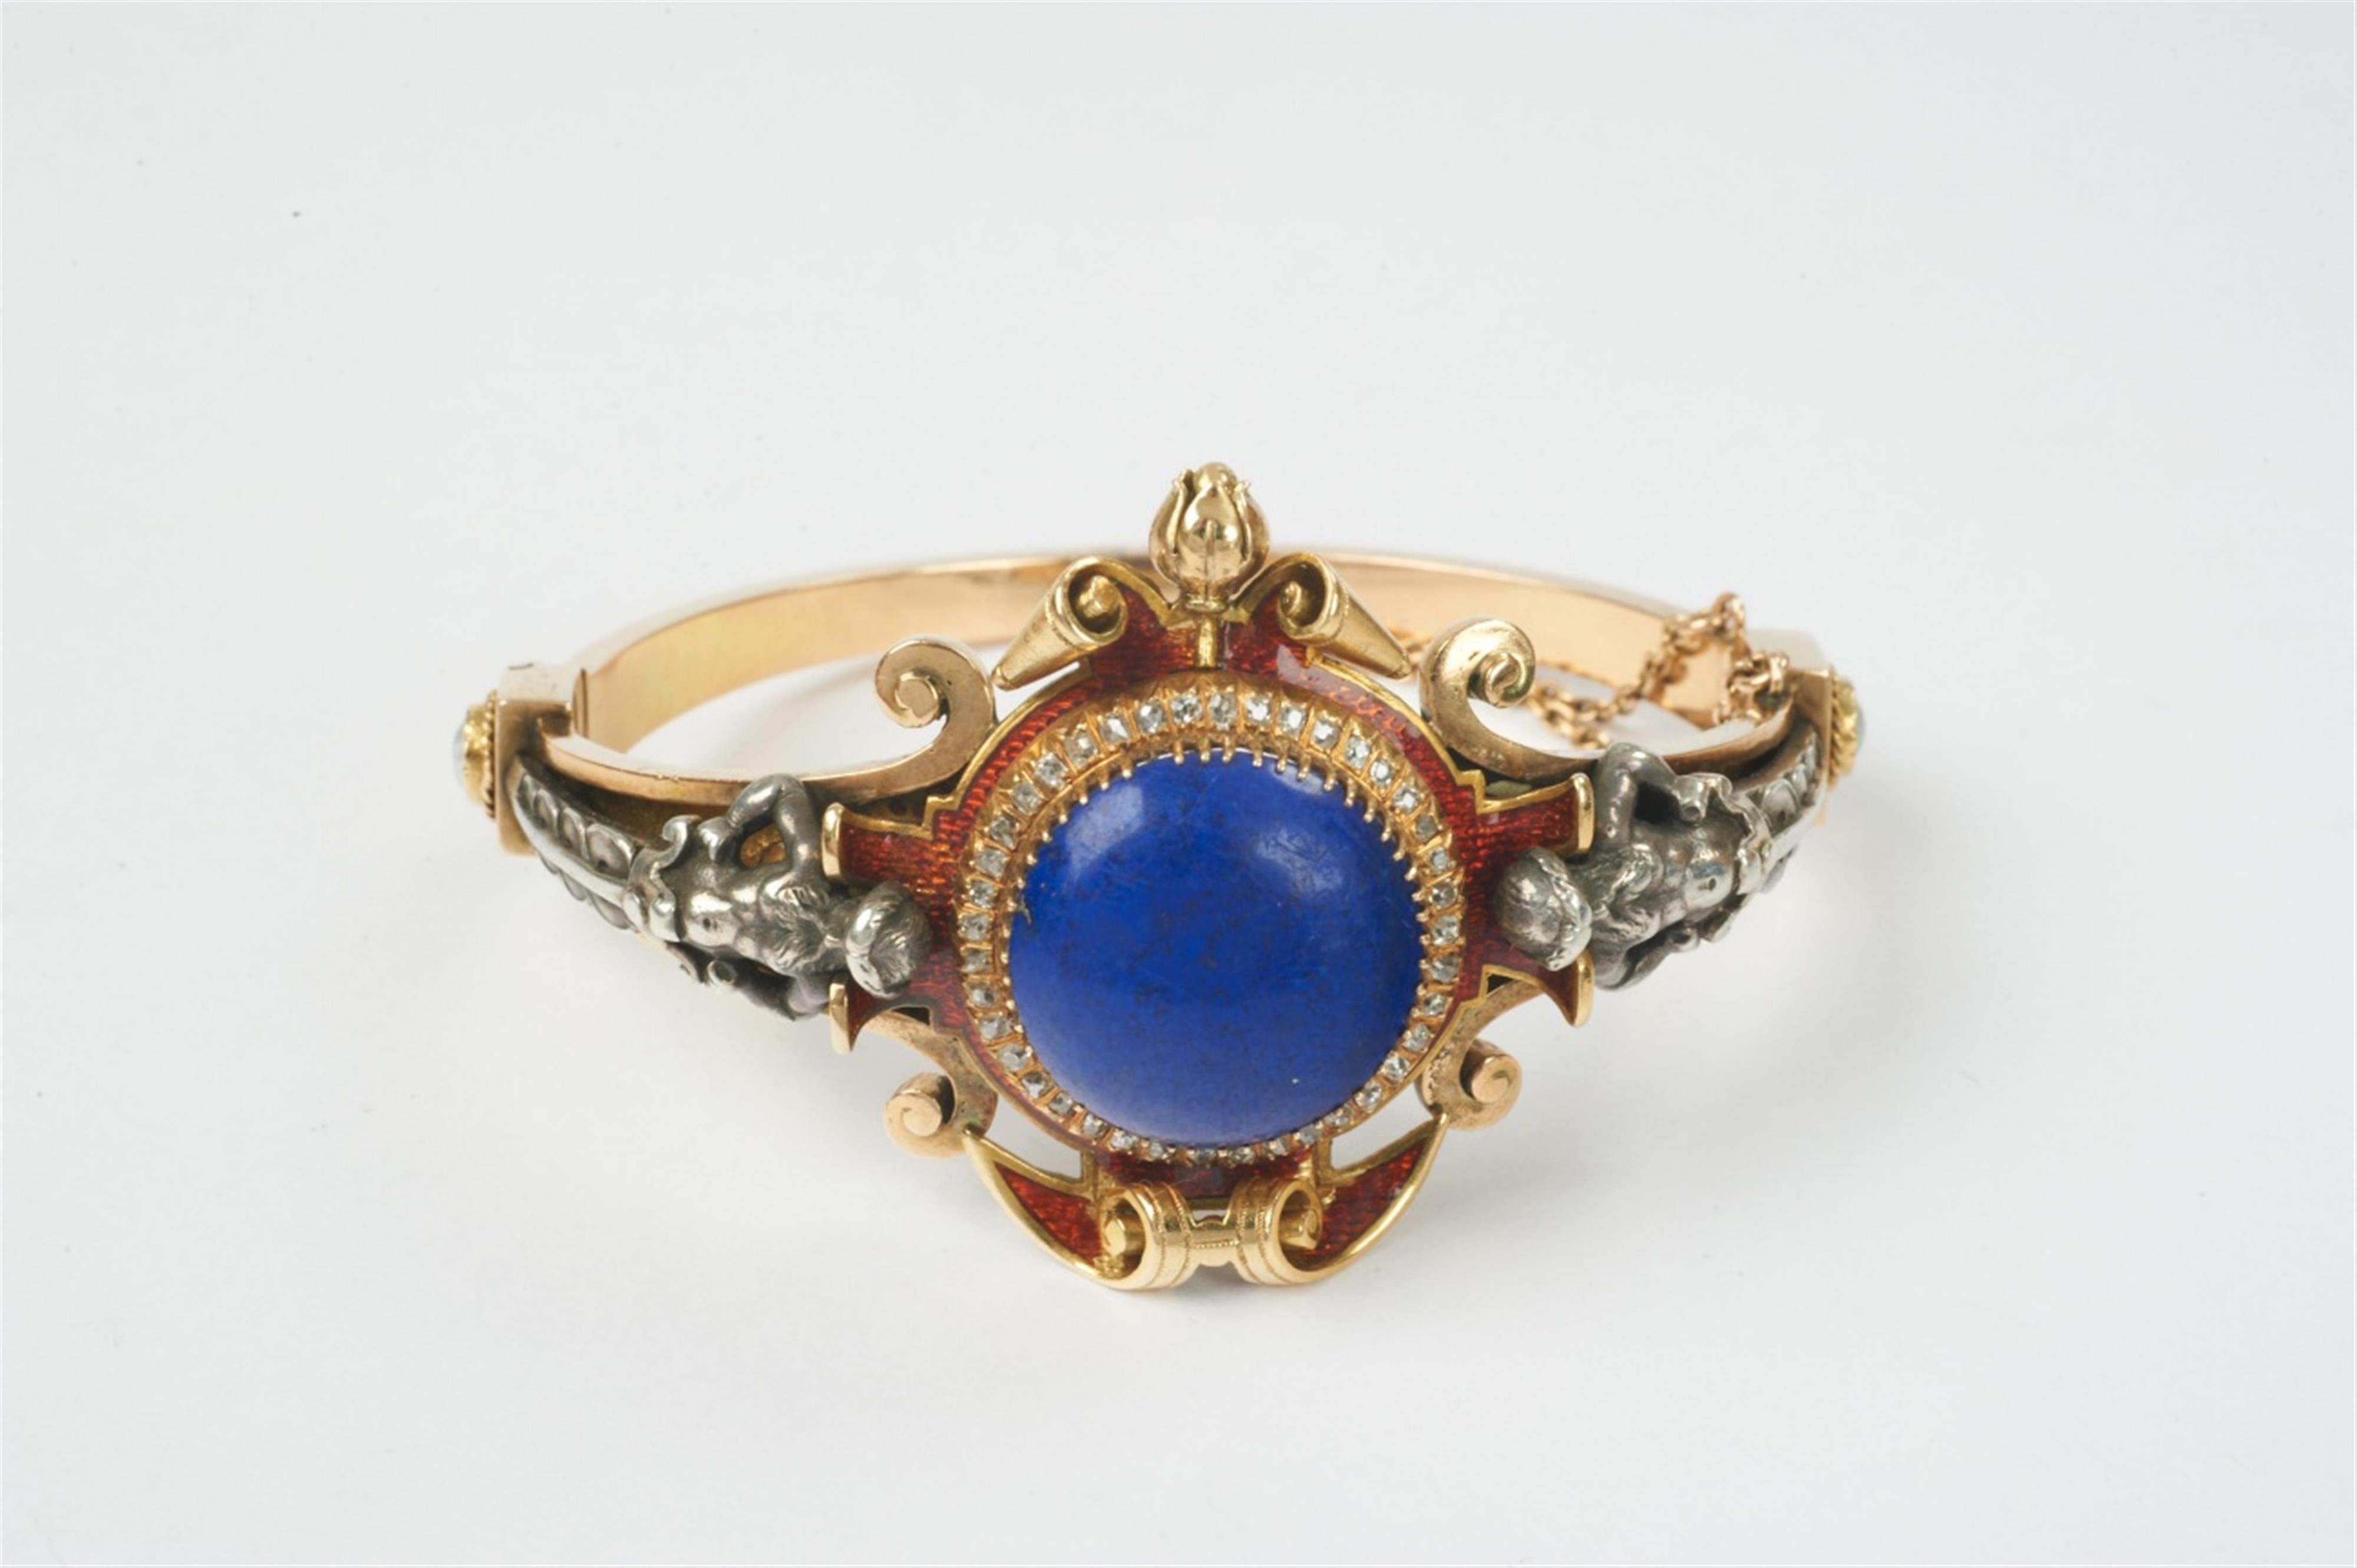 A 14k gold, silver and enamel Renaissance revival bangle with lapis lazuli cabochon - image-1